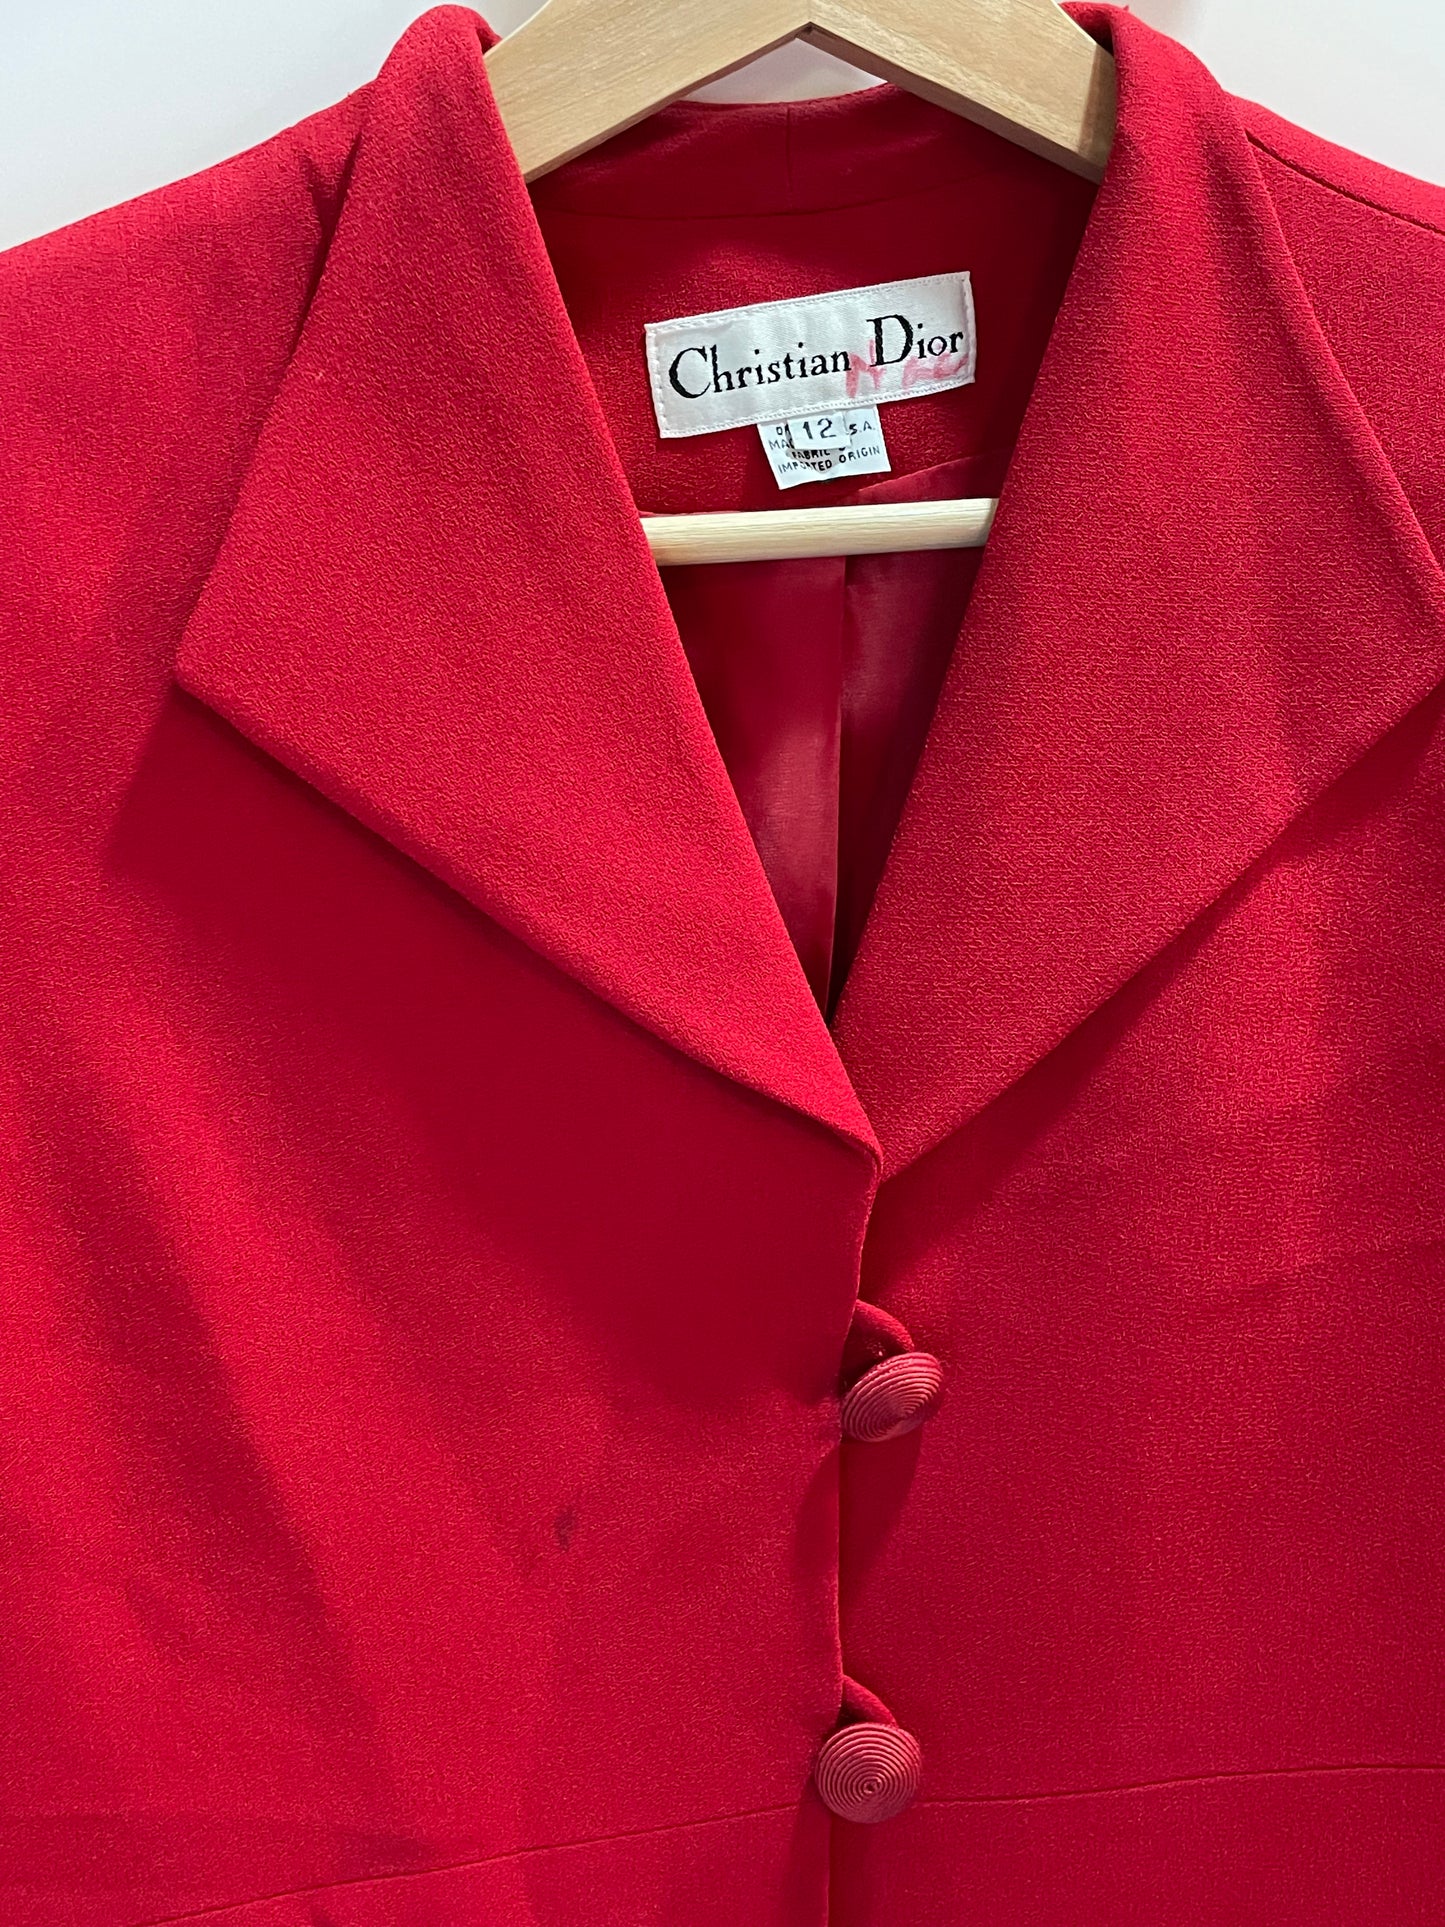 PEARLE closet - Vintage Christian Dior Red Blazer